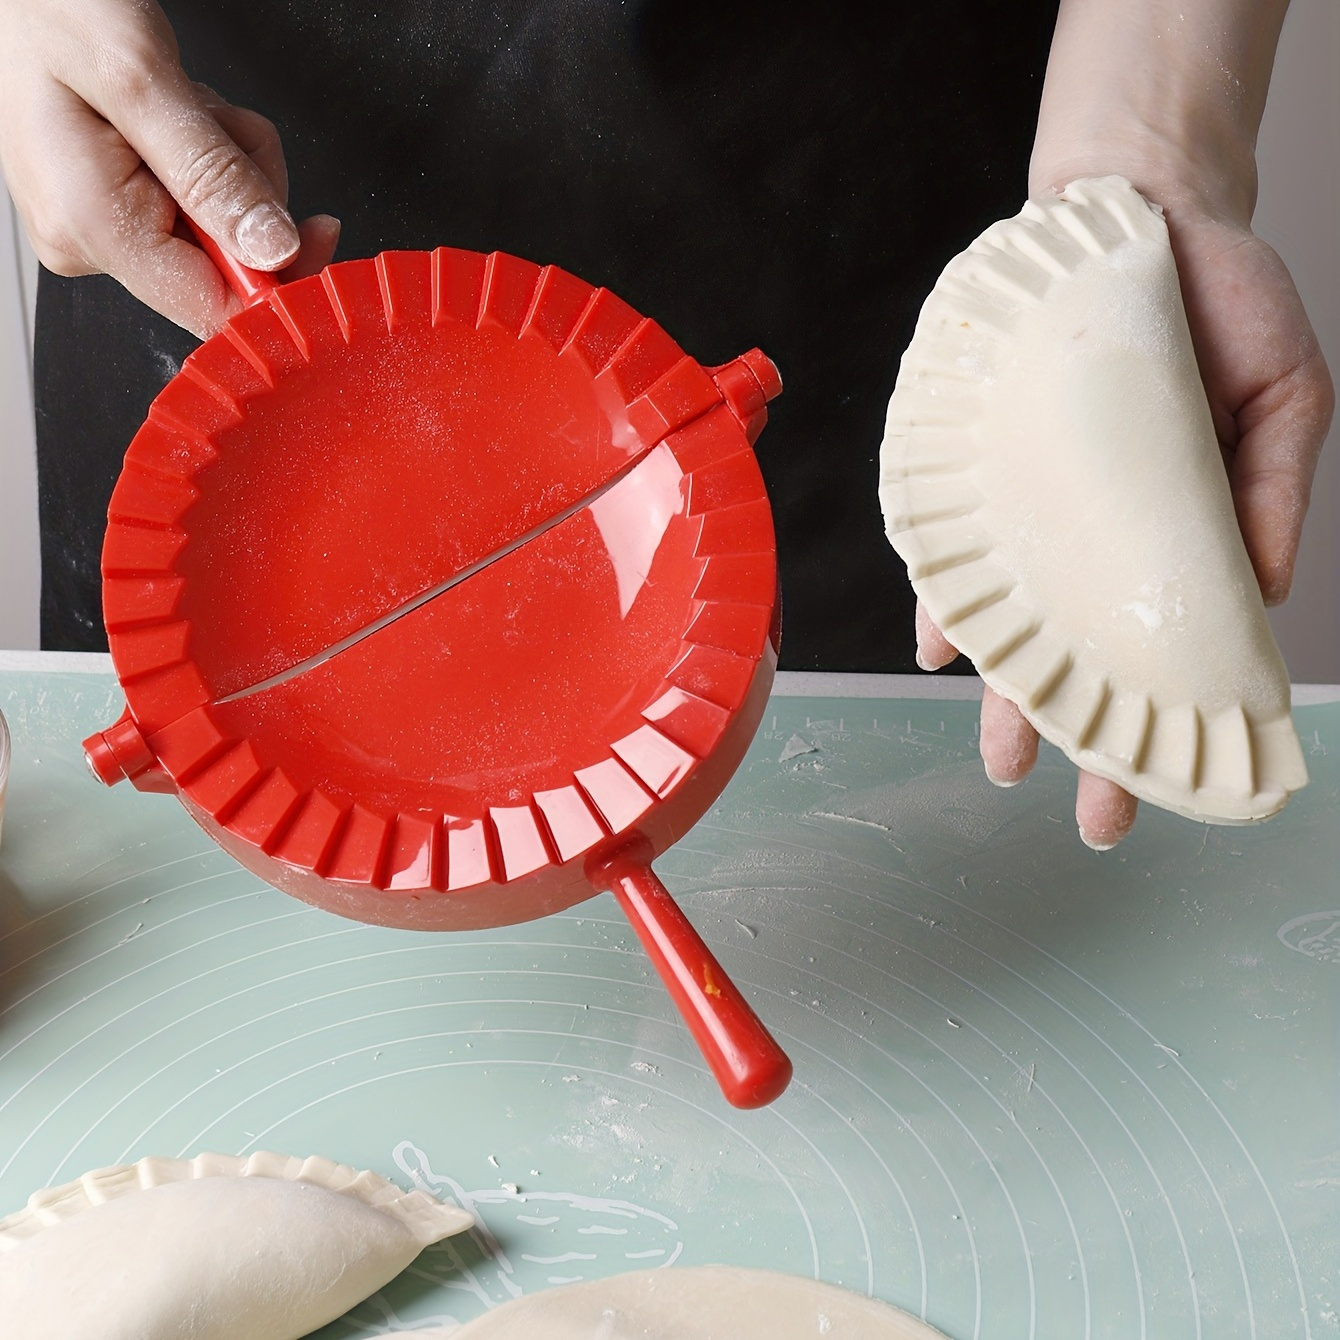 

1pc, Red Dumpling Maker, Durable Pp Plastic Dumpling Press Mold, Versatile Empanada & Ravioli Maker, Easy To Use, Kitchen Gadget, Restaurant Cooking Accessories